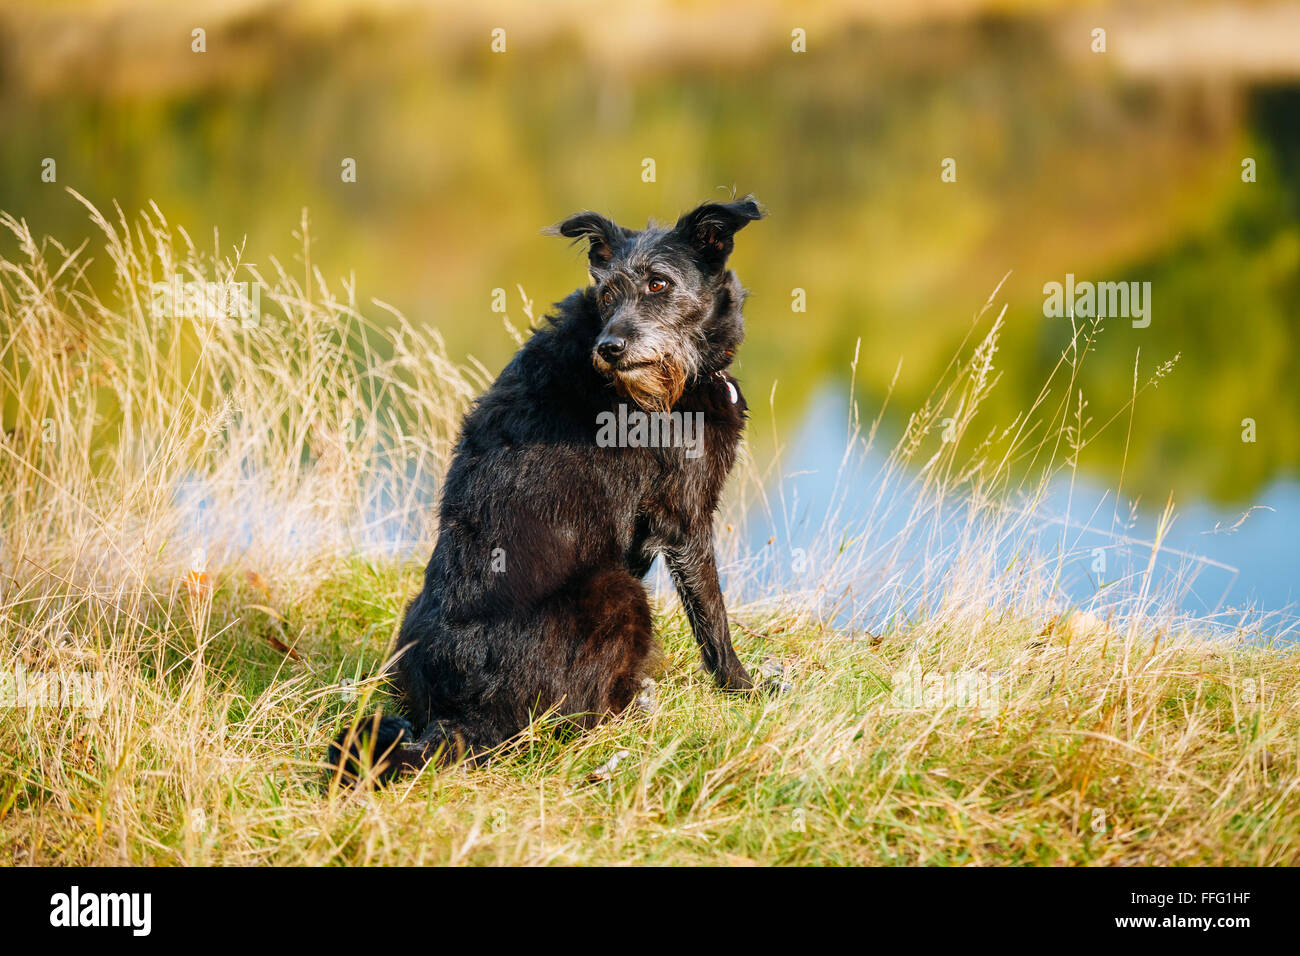 Small Size Black Dog in grass near river, lake. Summer Season. Stock Photo